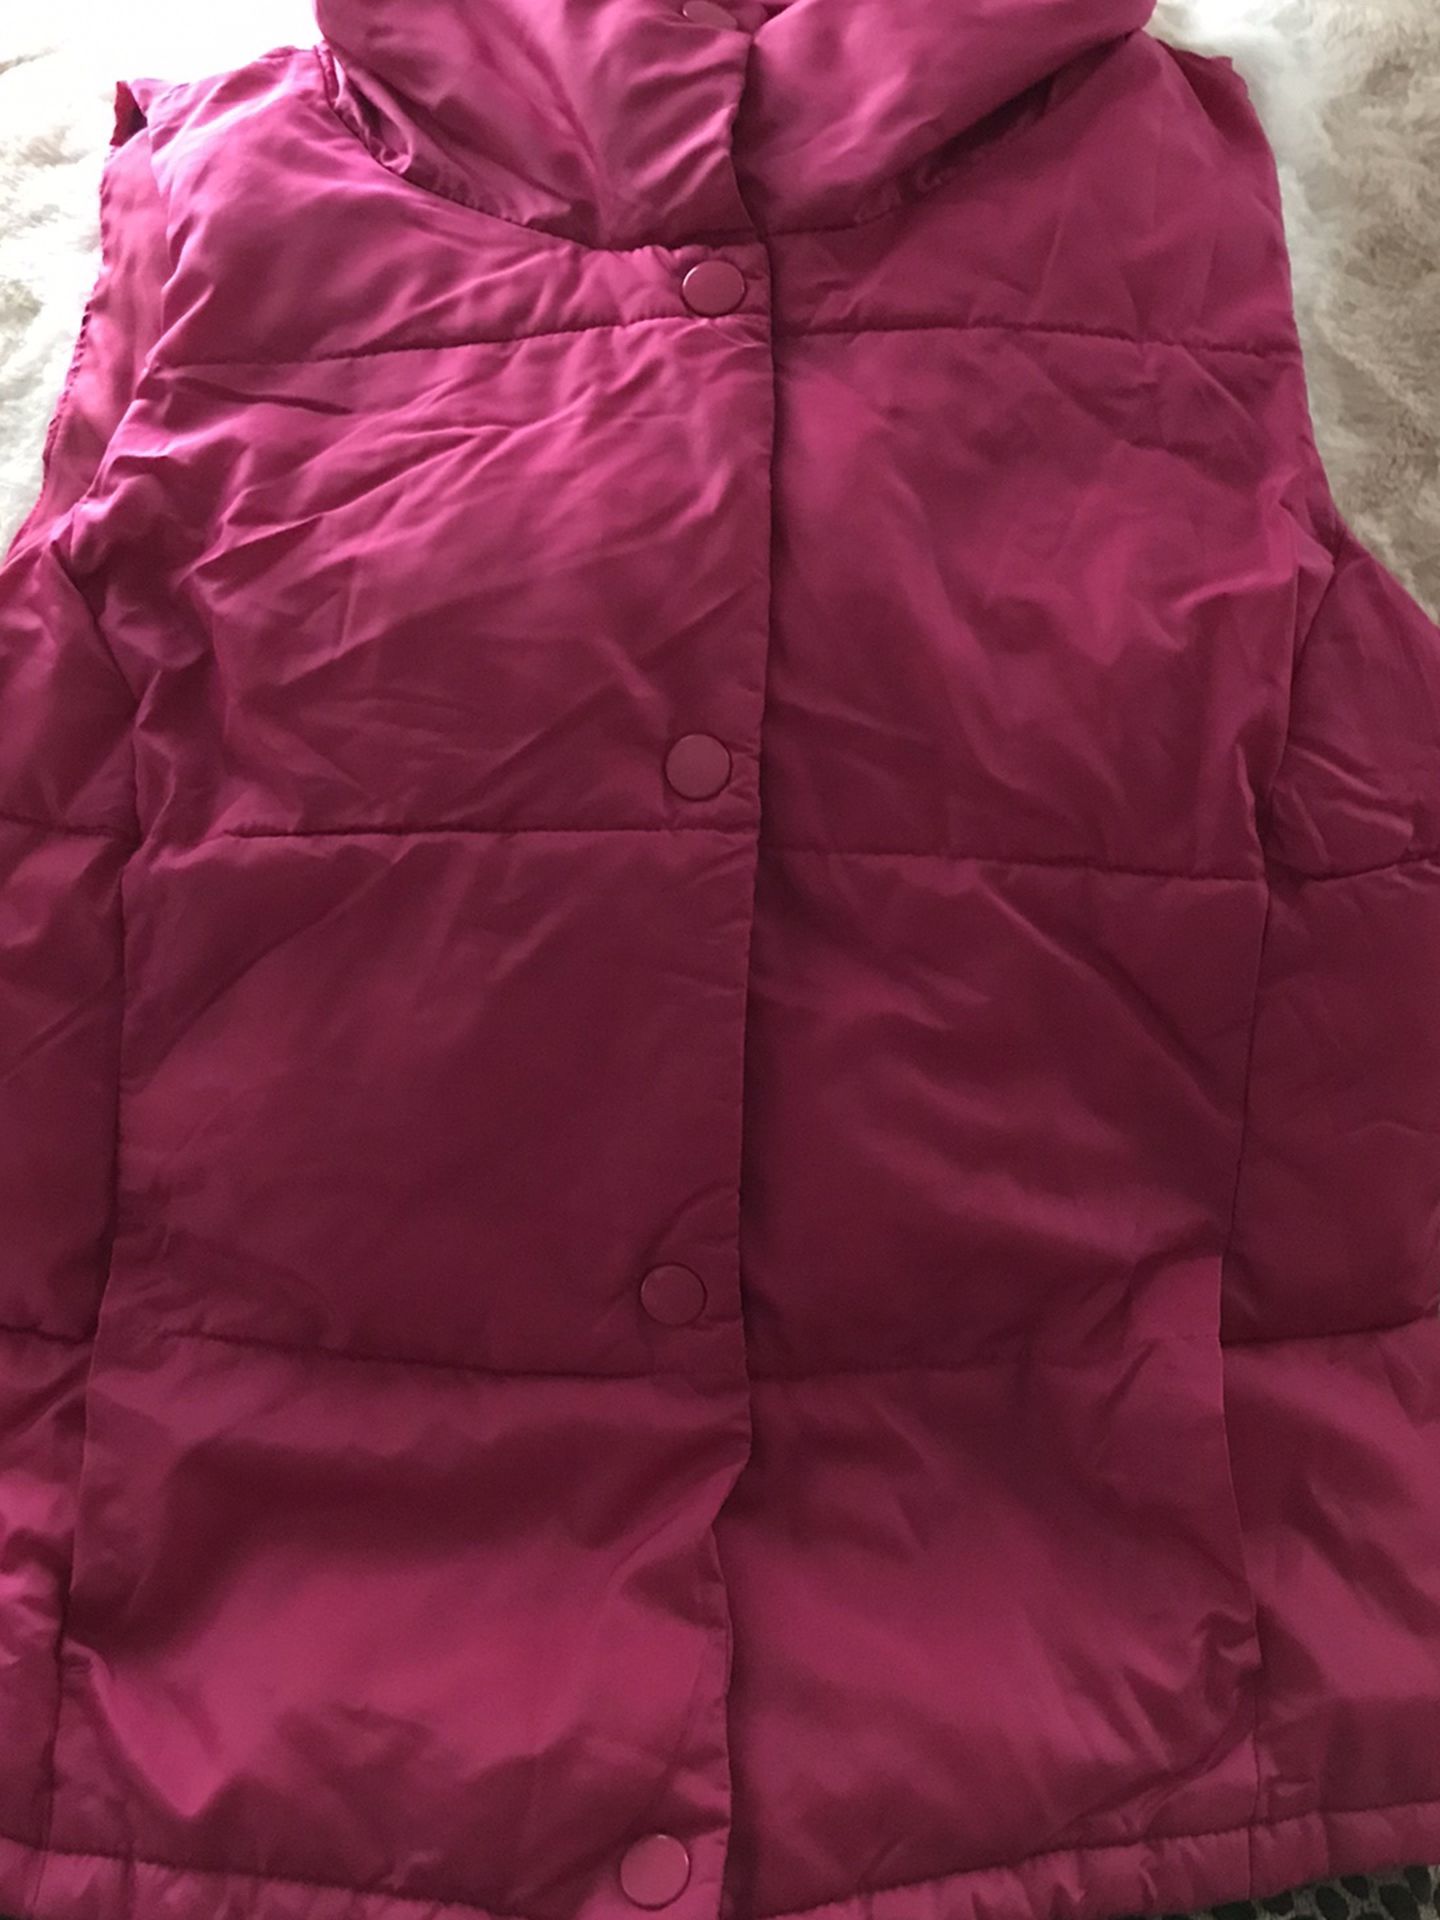 Old Navy Pink Puffer Vest